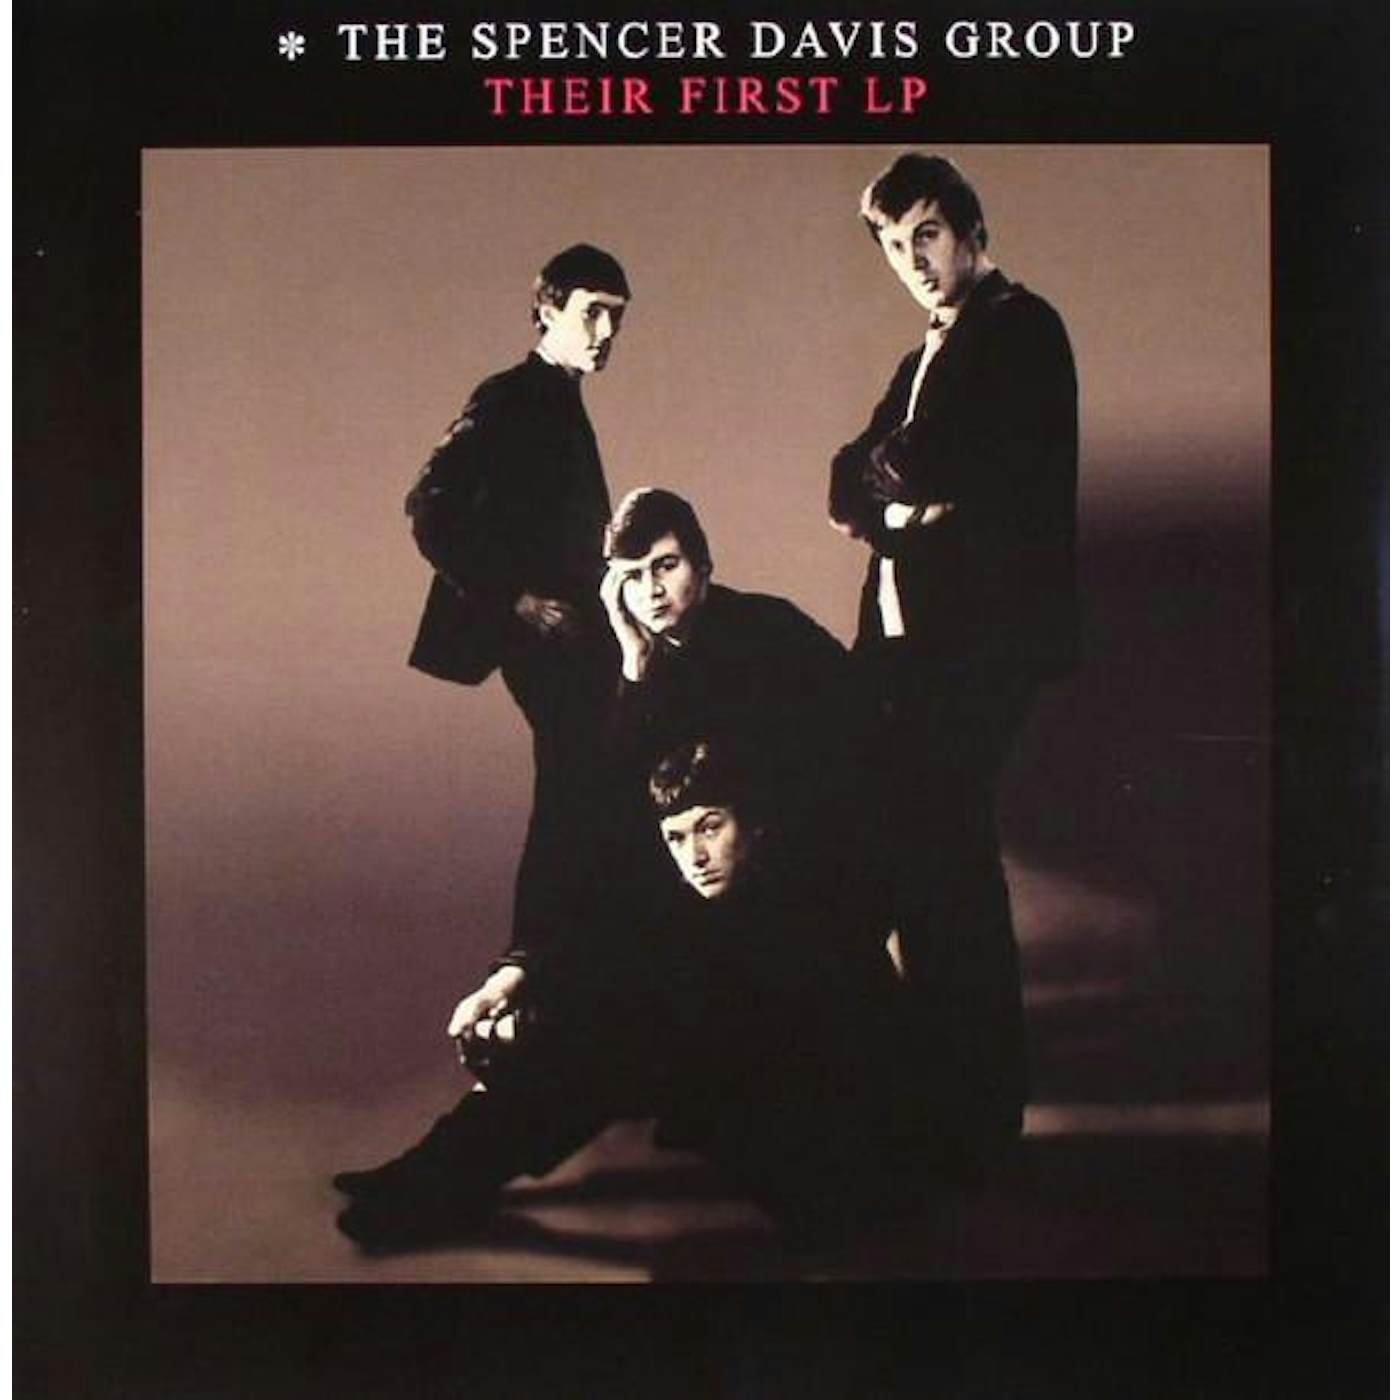 The Spencer Davis Group THEIR FIRST LP Vinyl Record